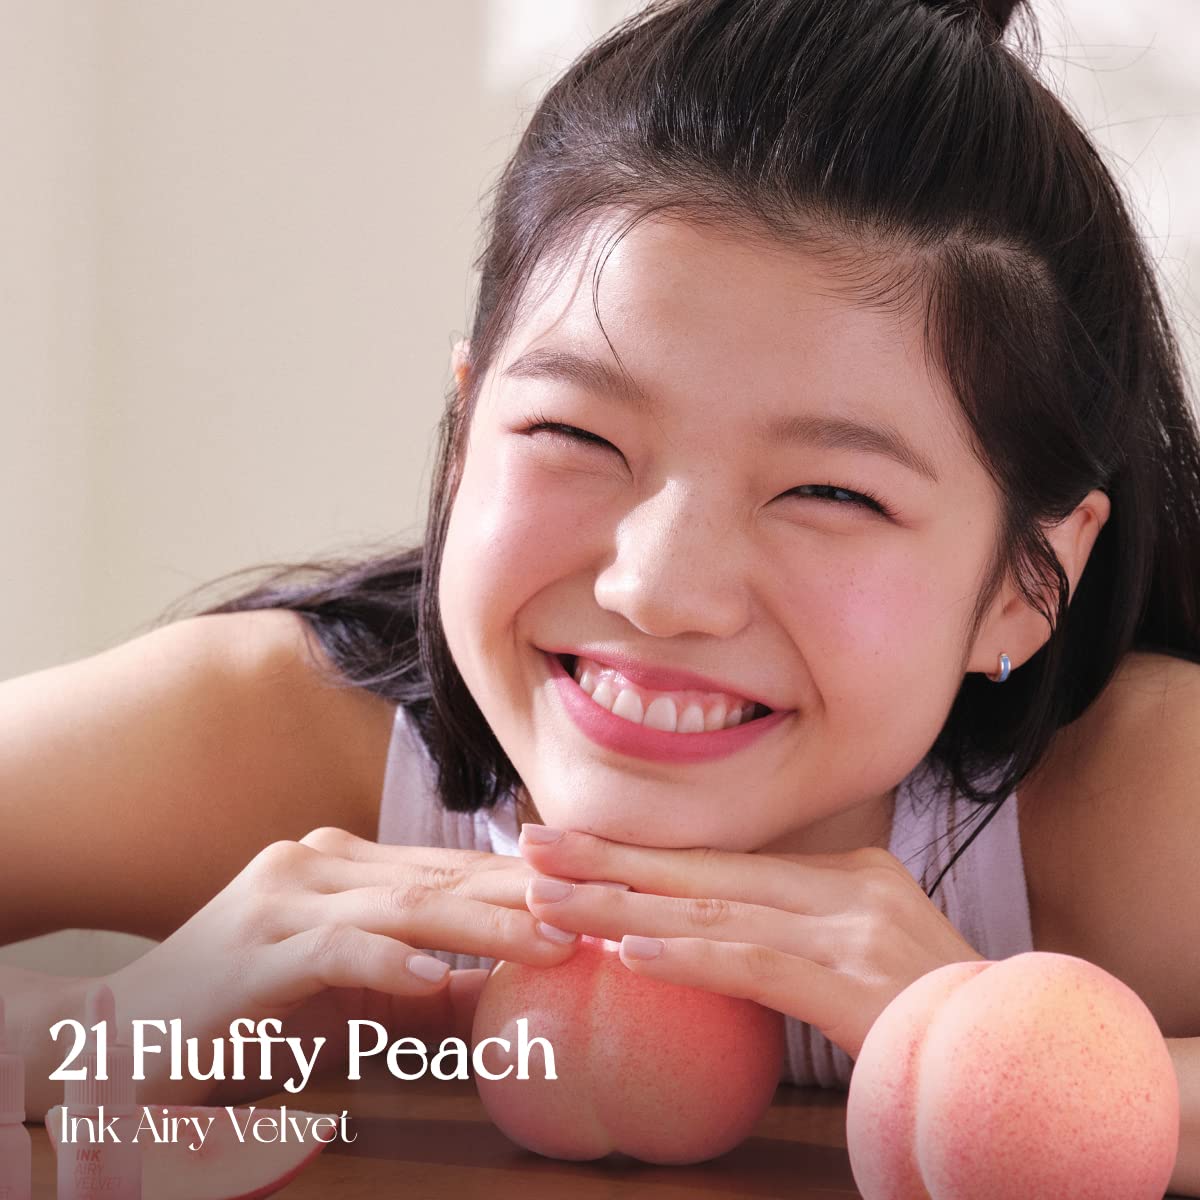 PERIPERA Ink Airy Velvet, 4g, 21 Fluffy Peach